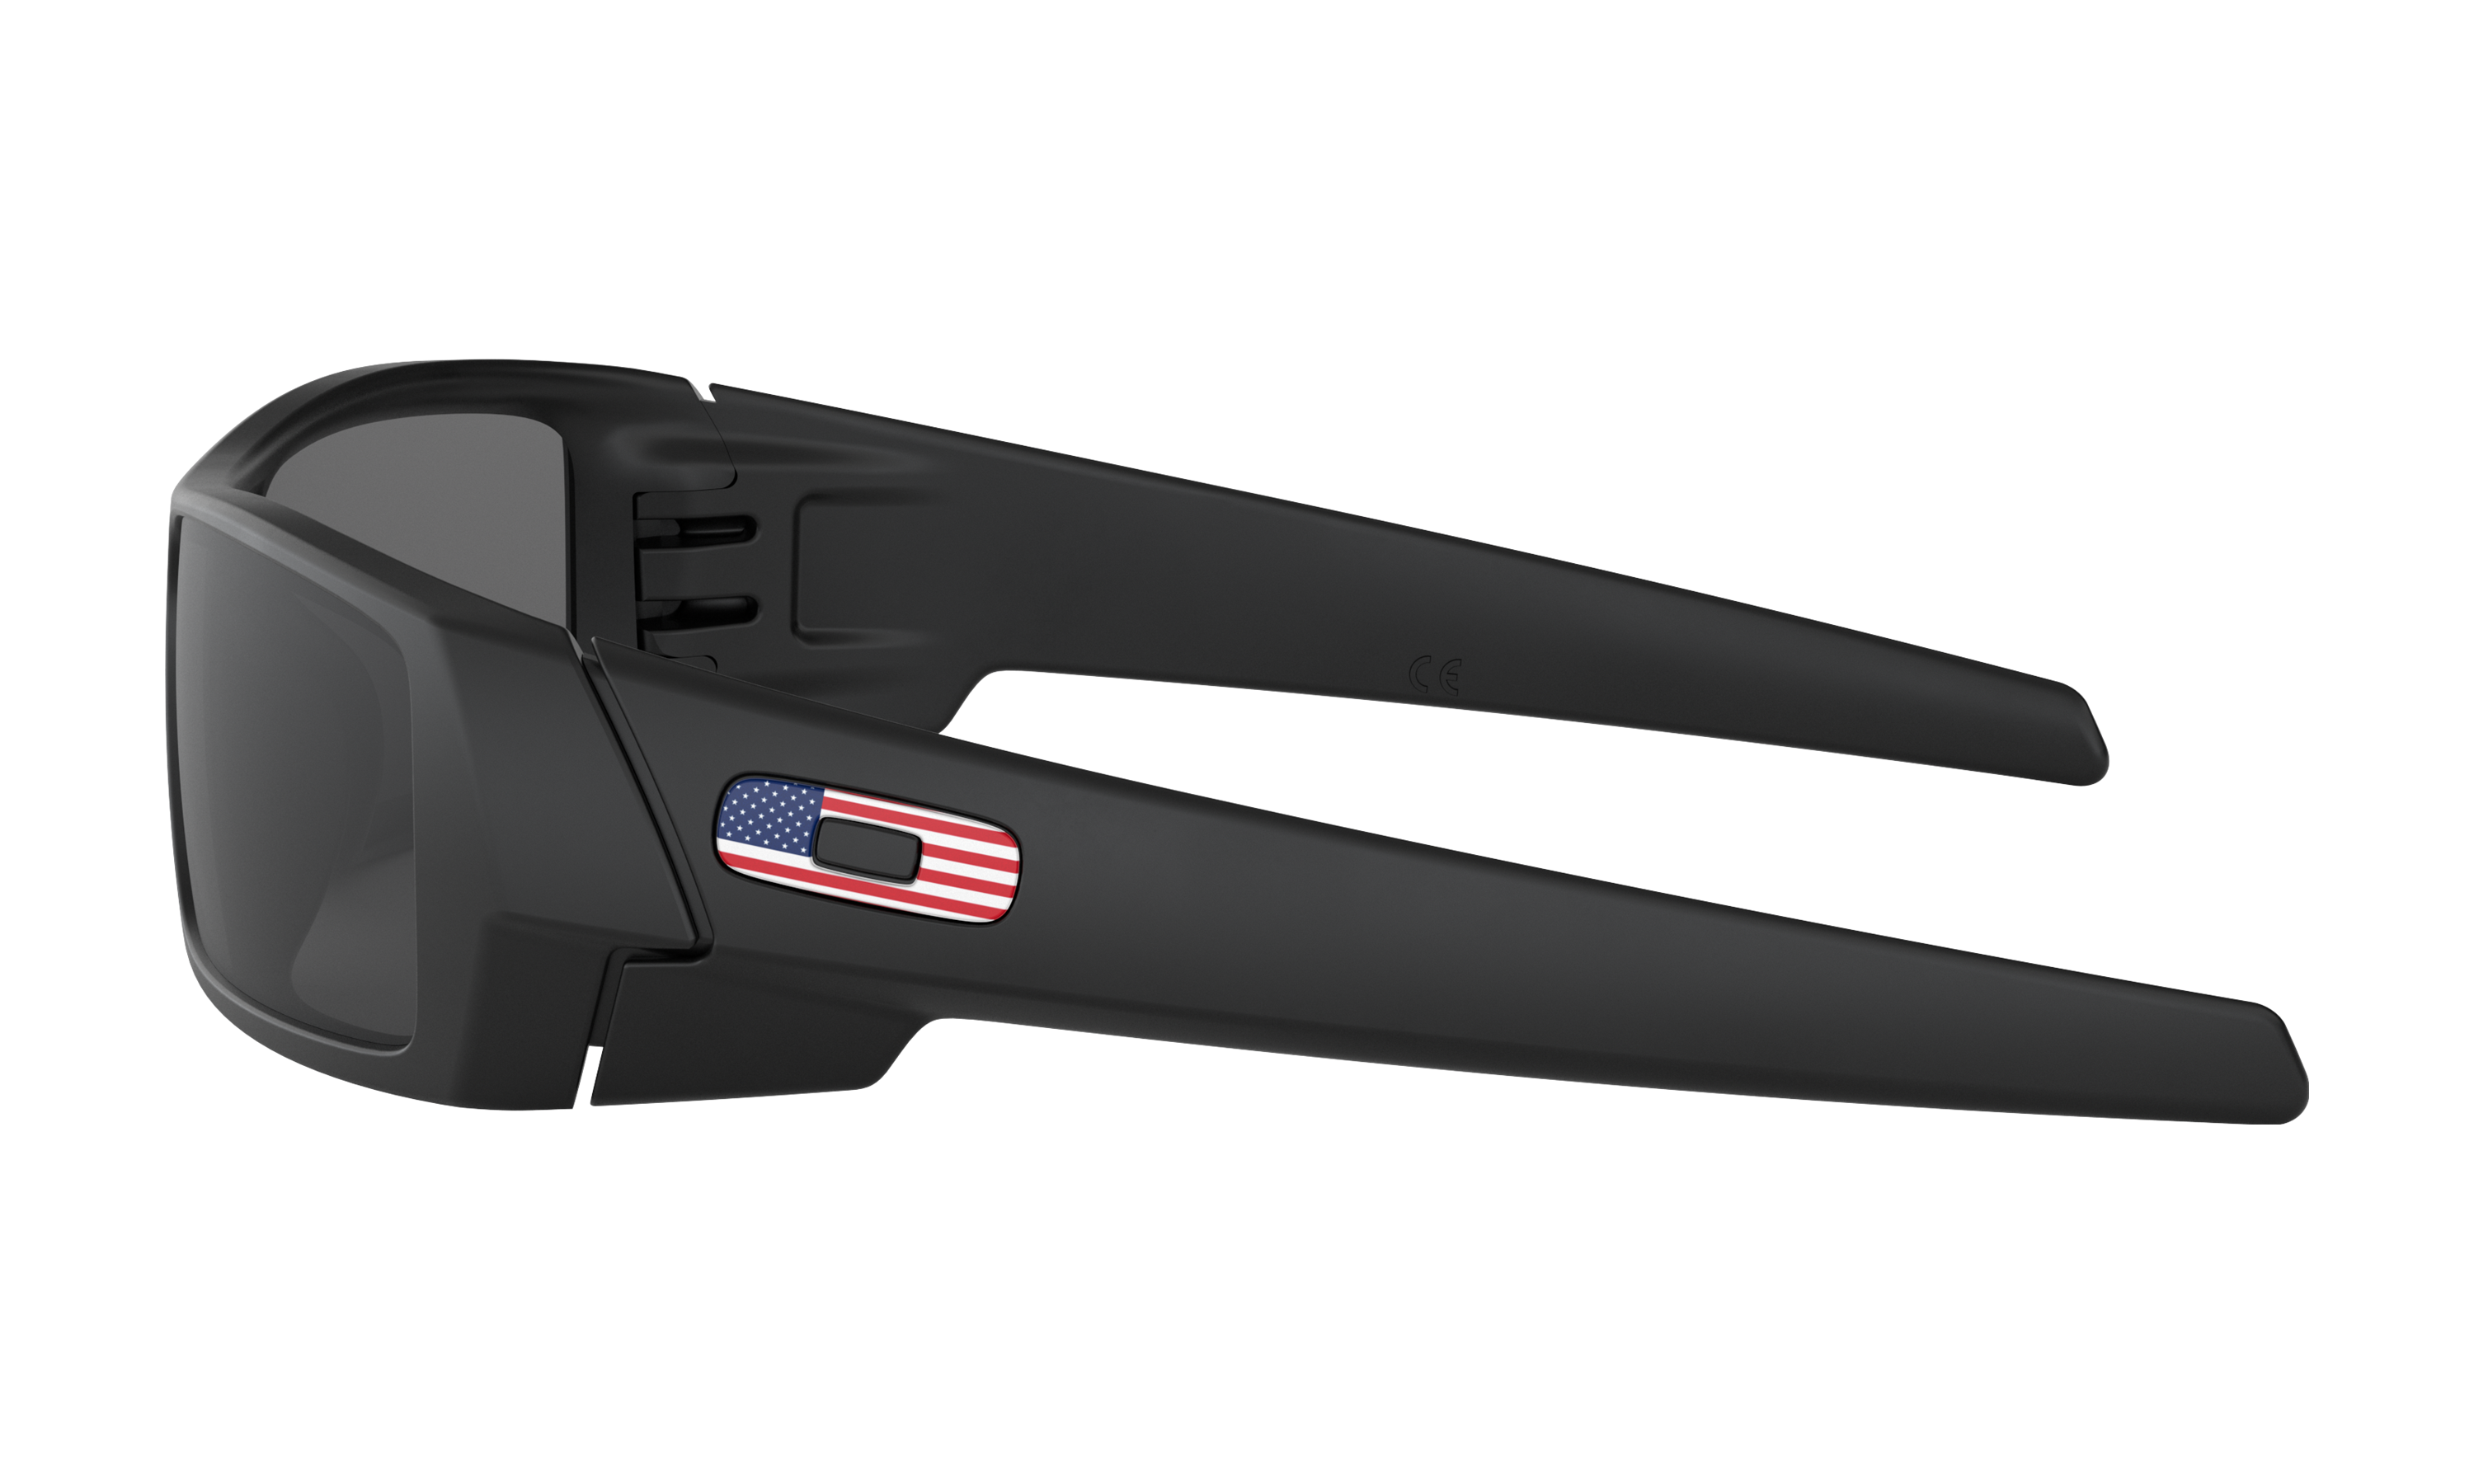 Oakley Men's Gascan Sunglasses - SI USA Flag Matte Black Frame - Gray Lens  - Aerospace Arms